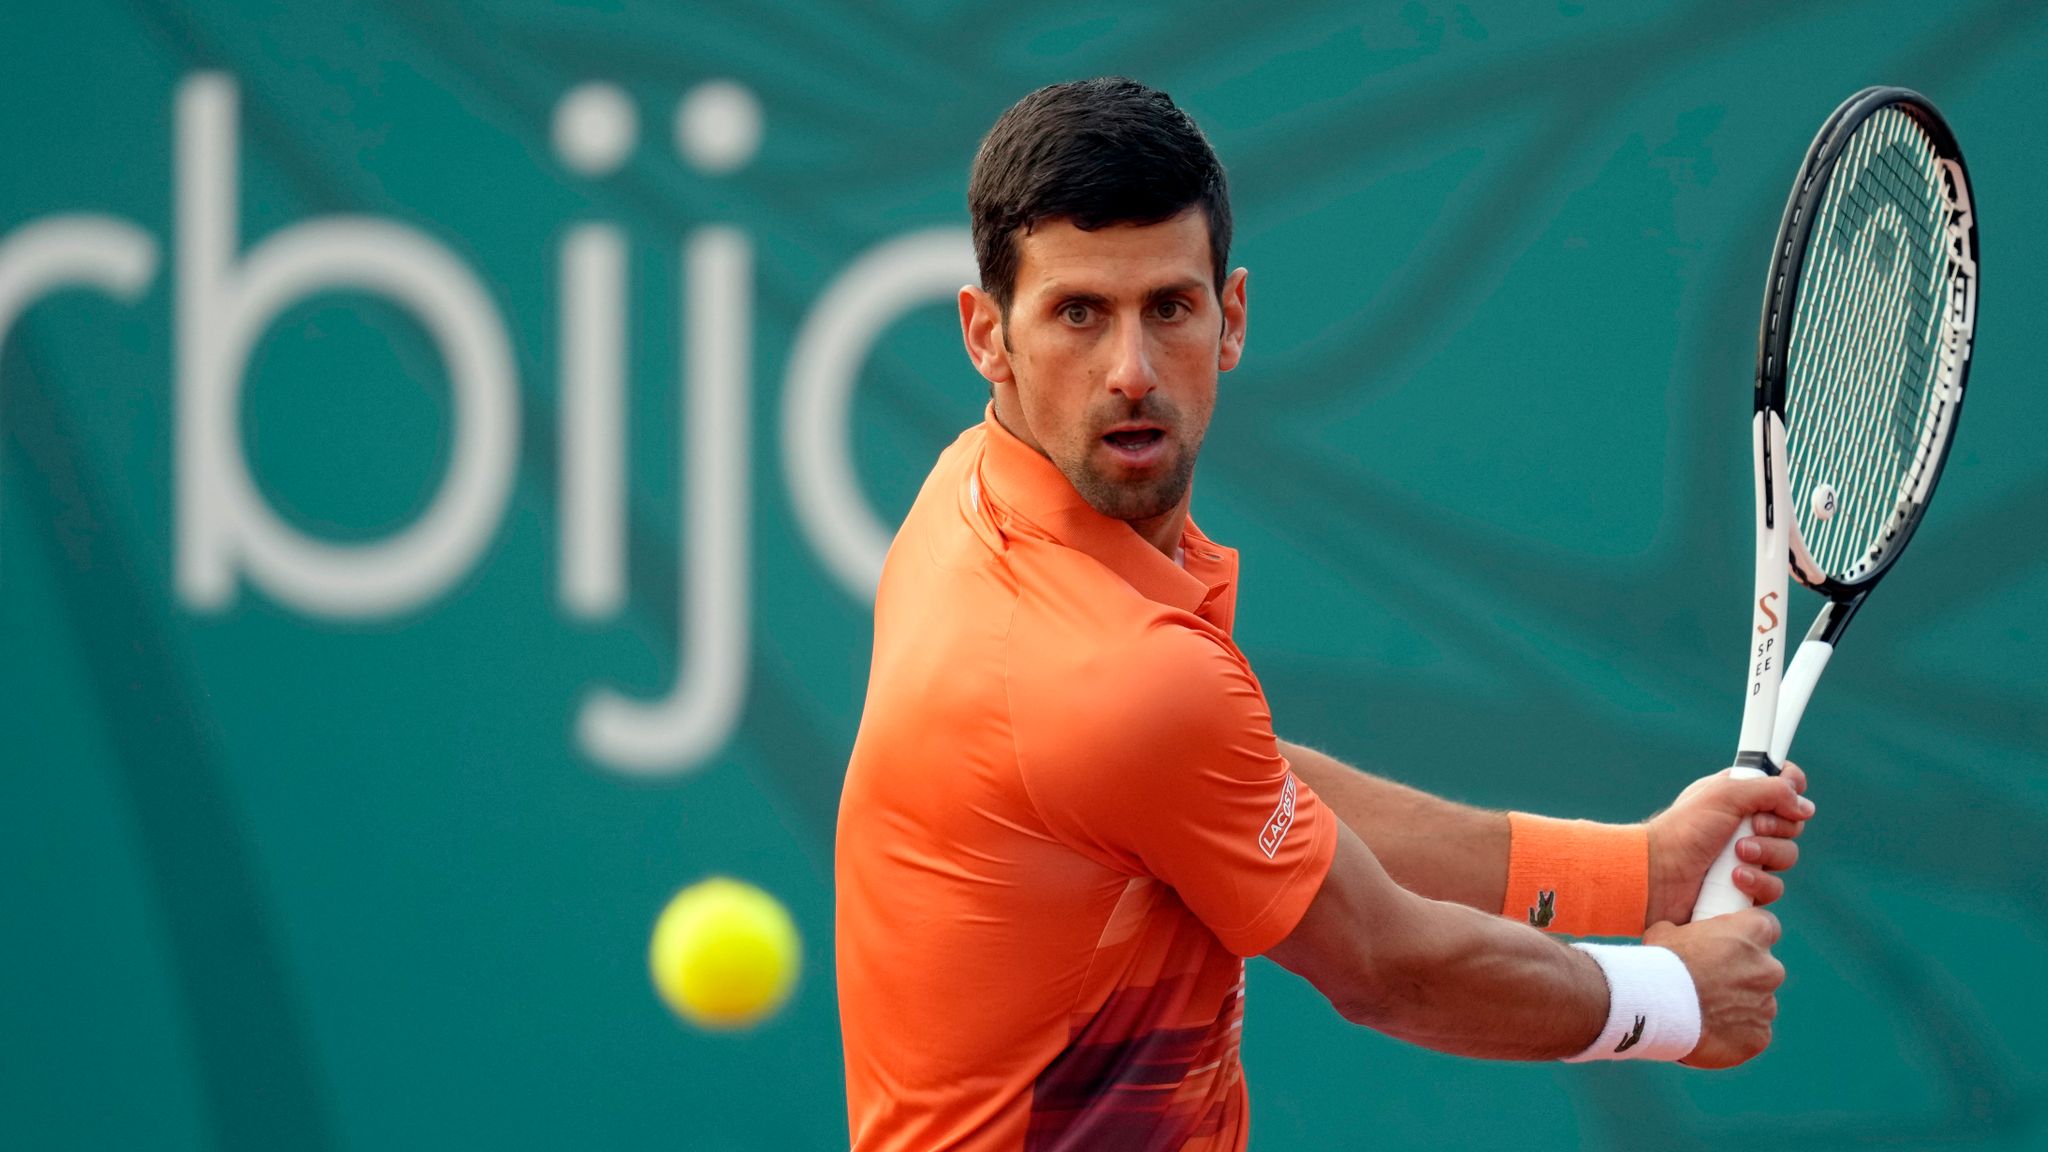 Novak Djokovic is still motivated to continue his historic tennis career.